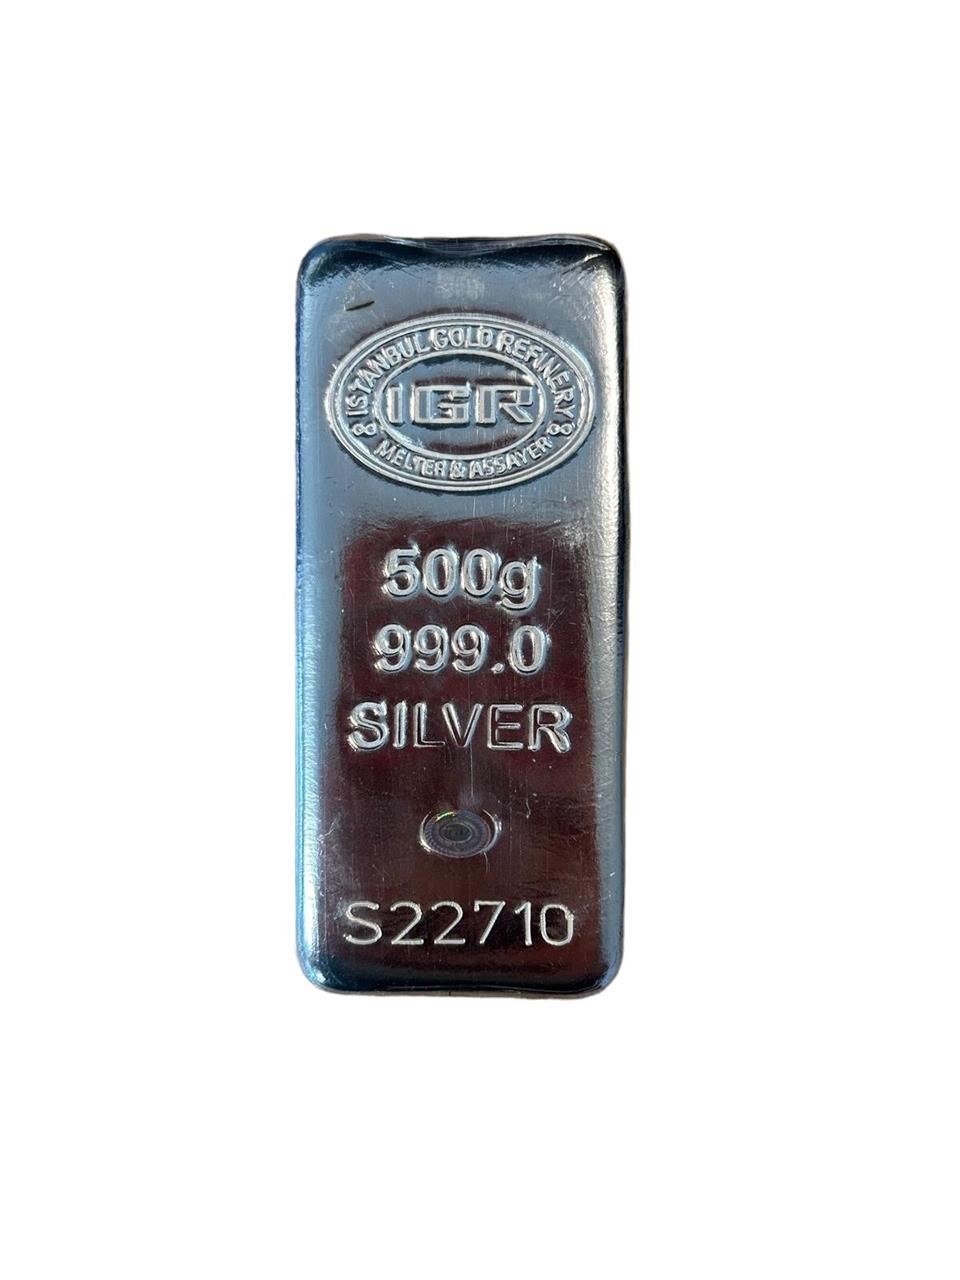 IGR Silver Bar 999.0 Purity 500 grams